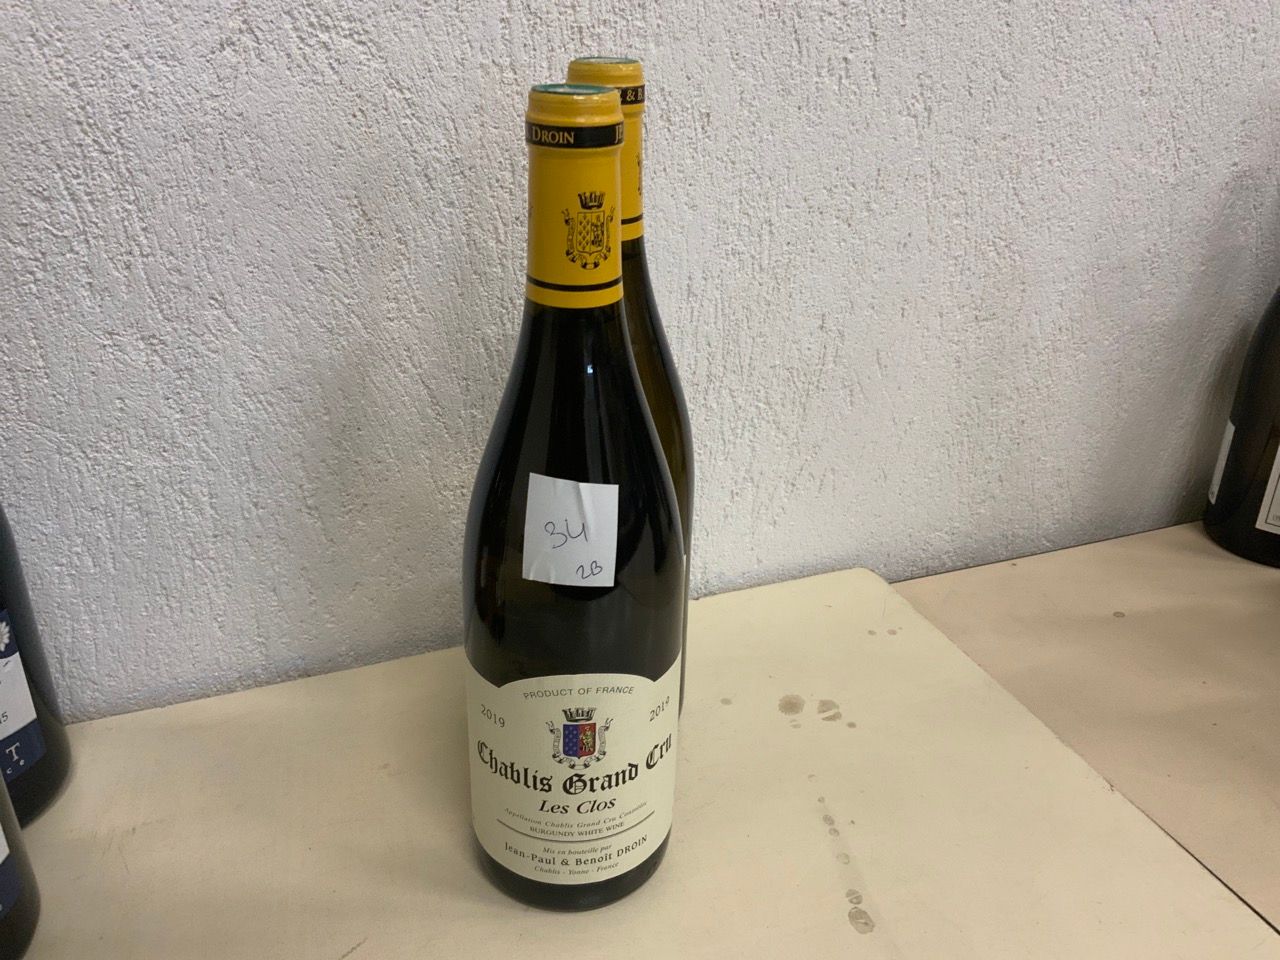 Null 2瓶 Les clos chablis grand cru blanc 2019 Jean-Paul & Benoit Droin